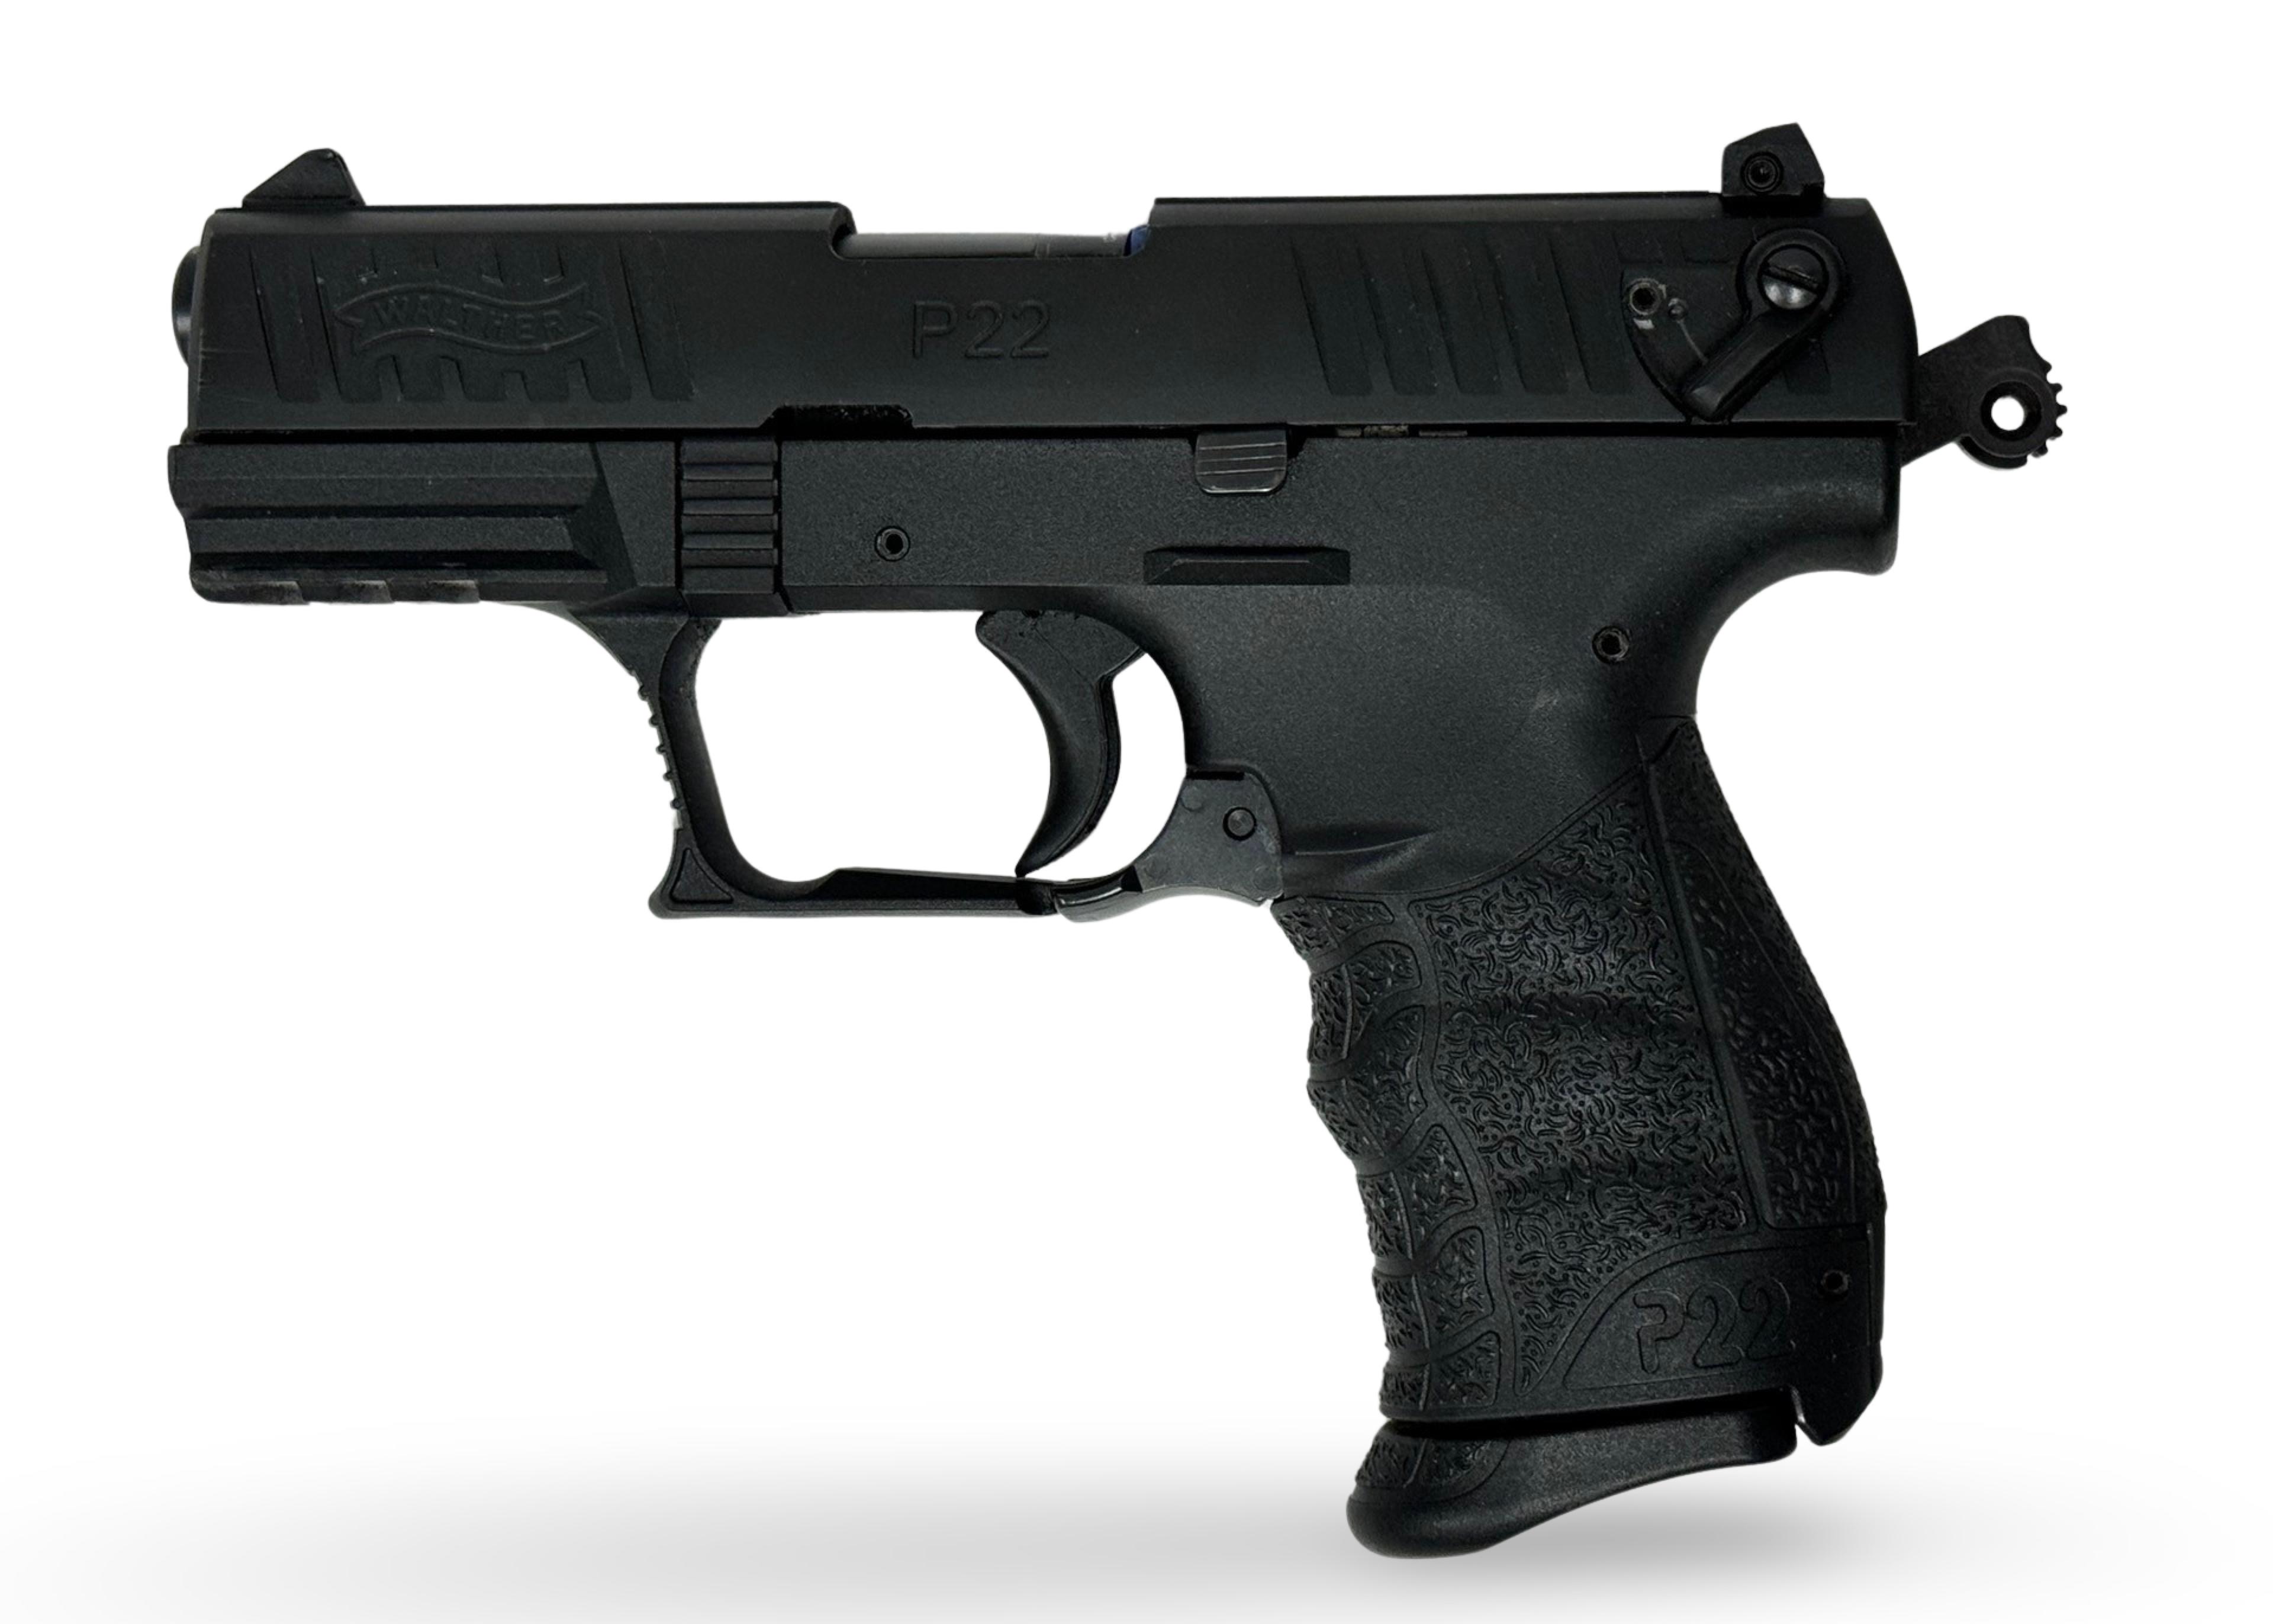 NIB Walther Model P22Q .22 LR Semi-Automatic Pistol with (2) Magazines